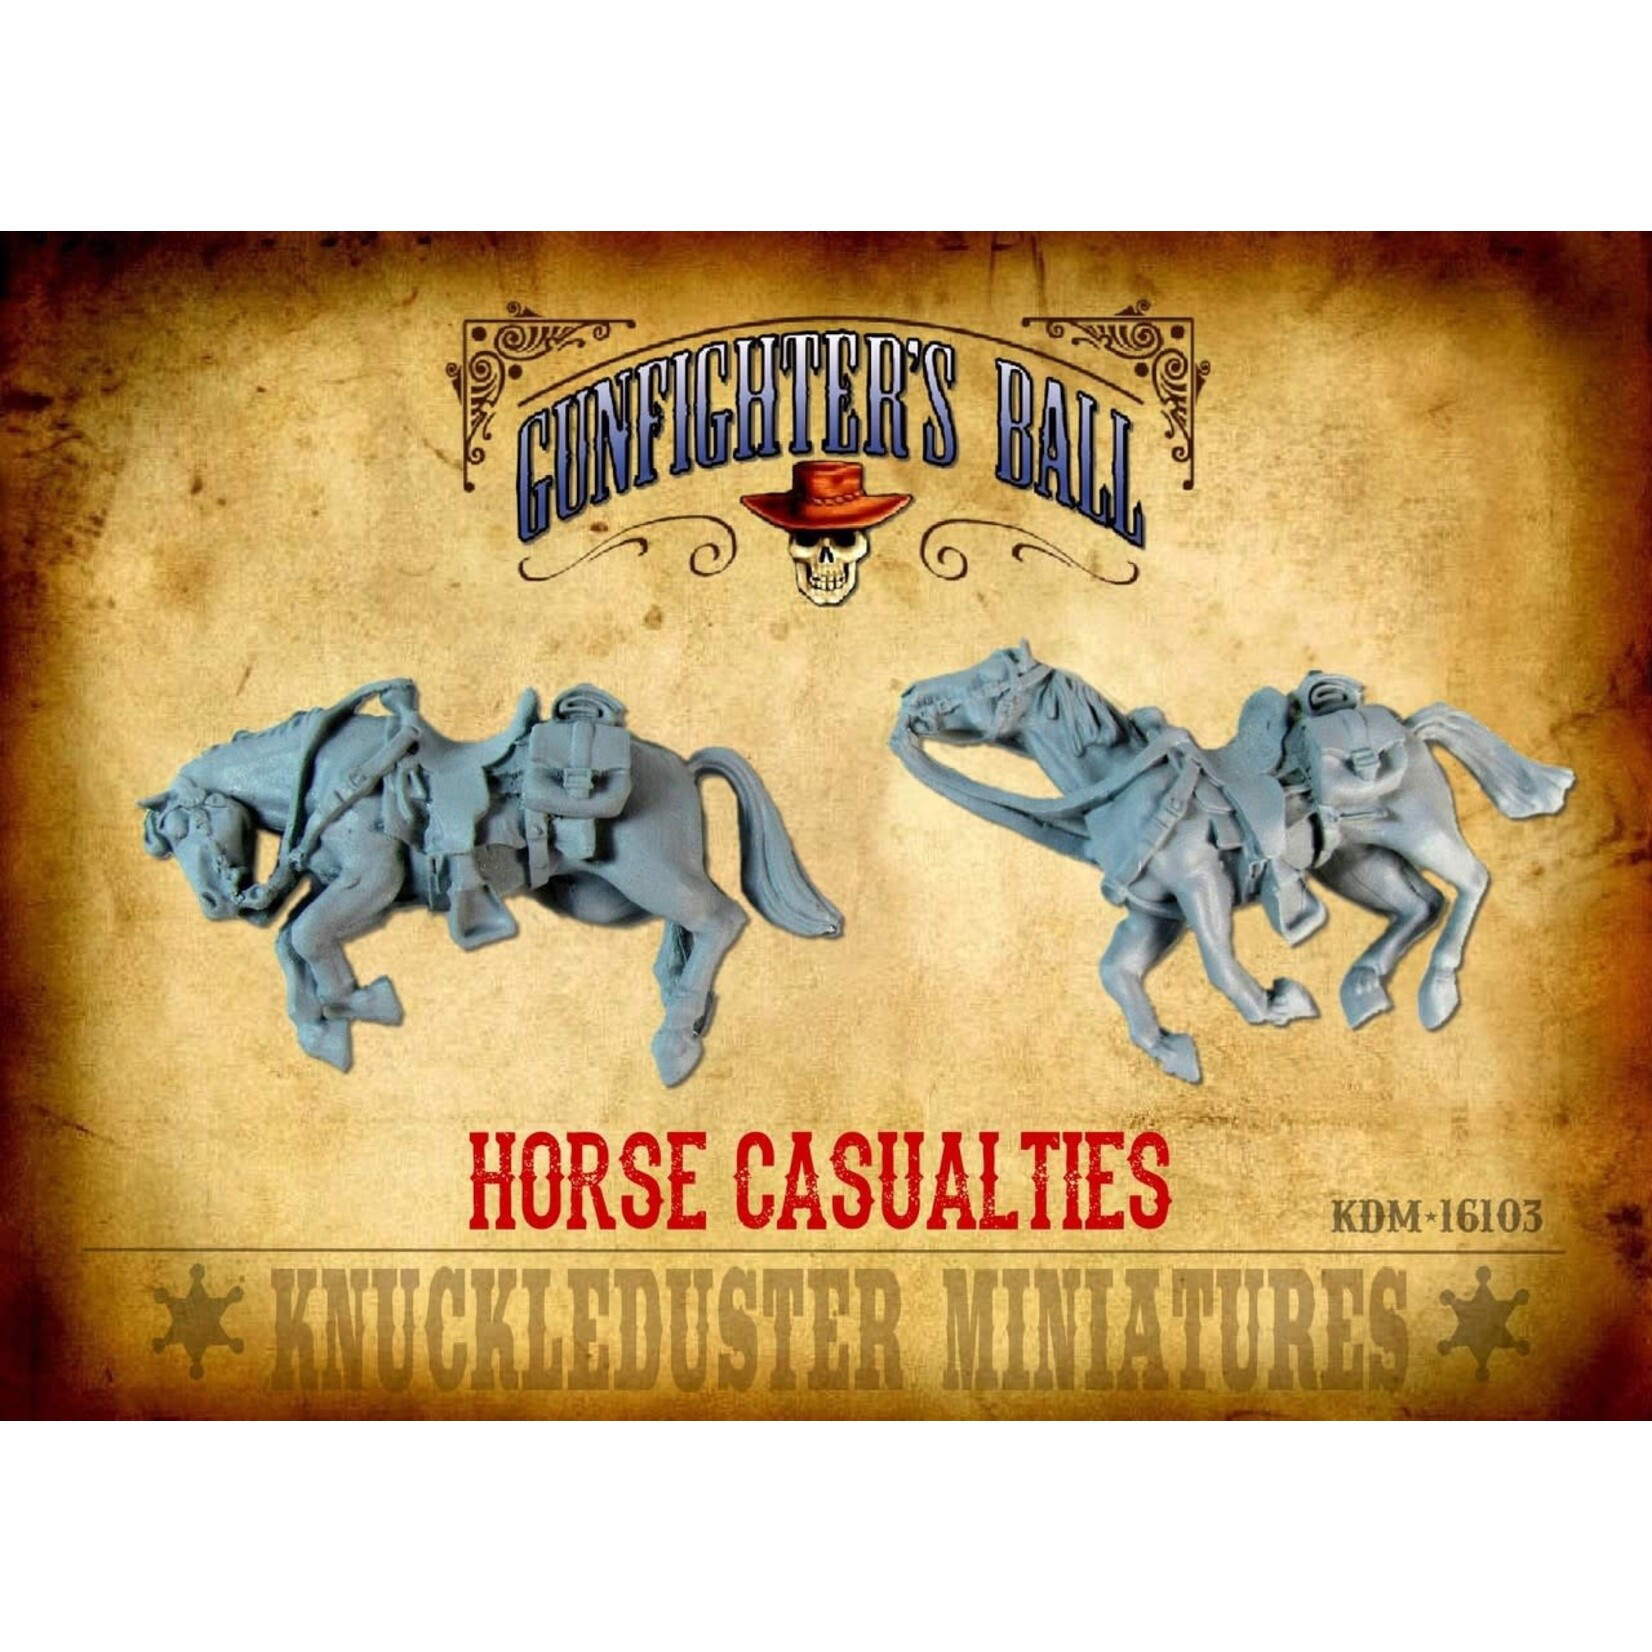 Knuckleduster Miniatures Horse Casualties